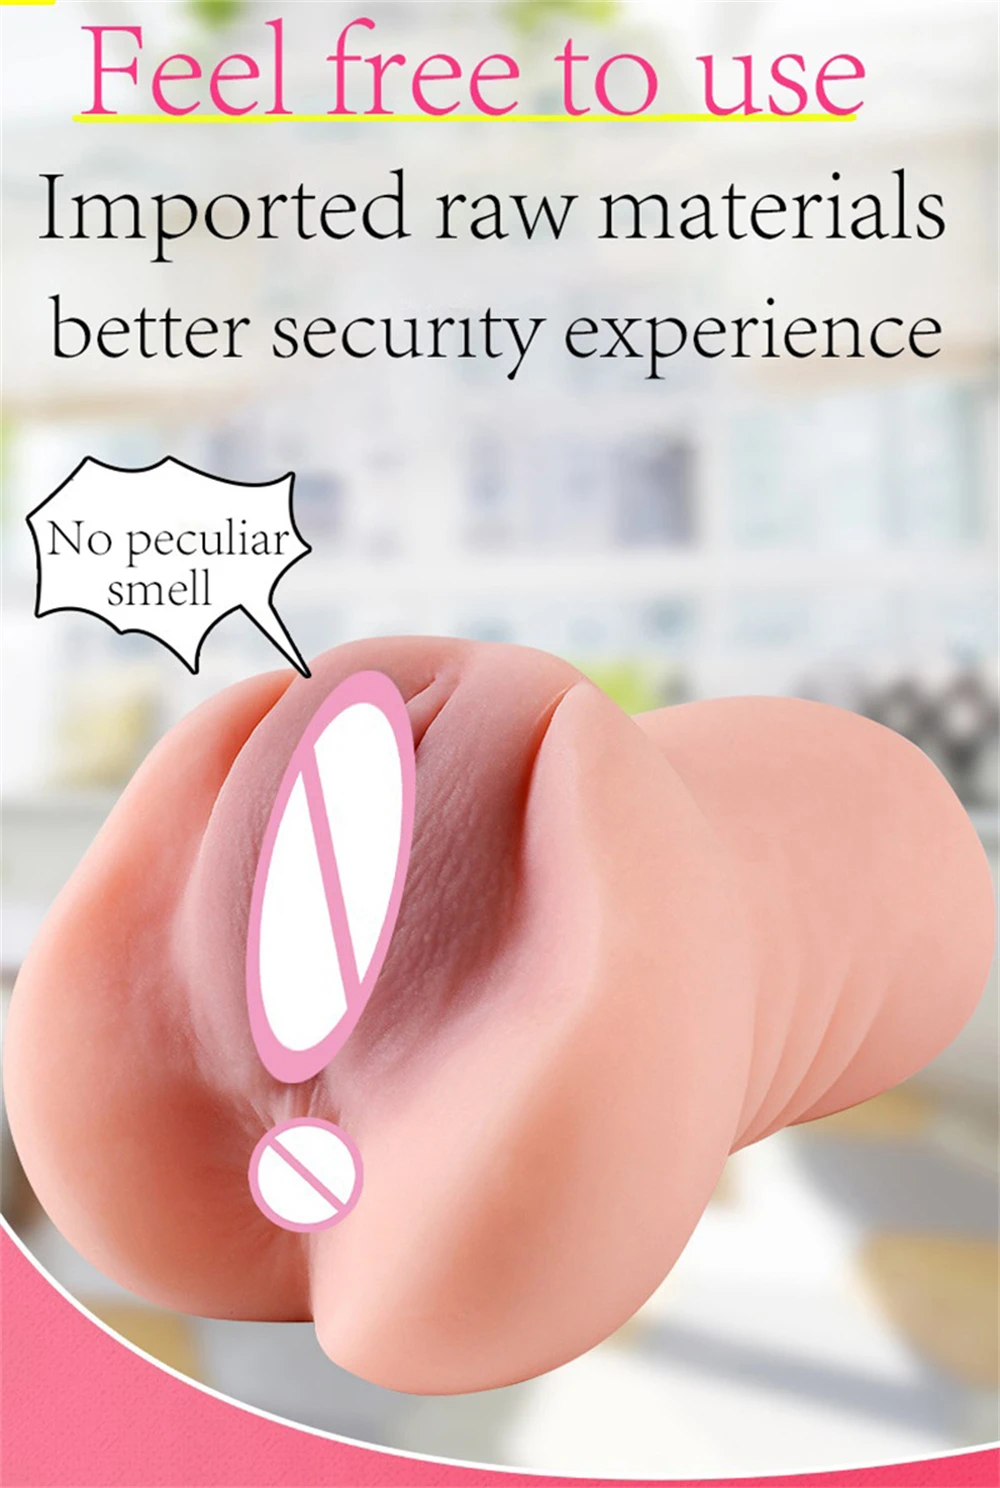 3D Artificial Vagina Male Masturbators Cup Realistic Vaginal Real Vagina Anal Soft Silicone Ass Sex Toys for Men Masturbation